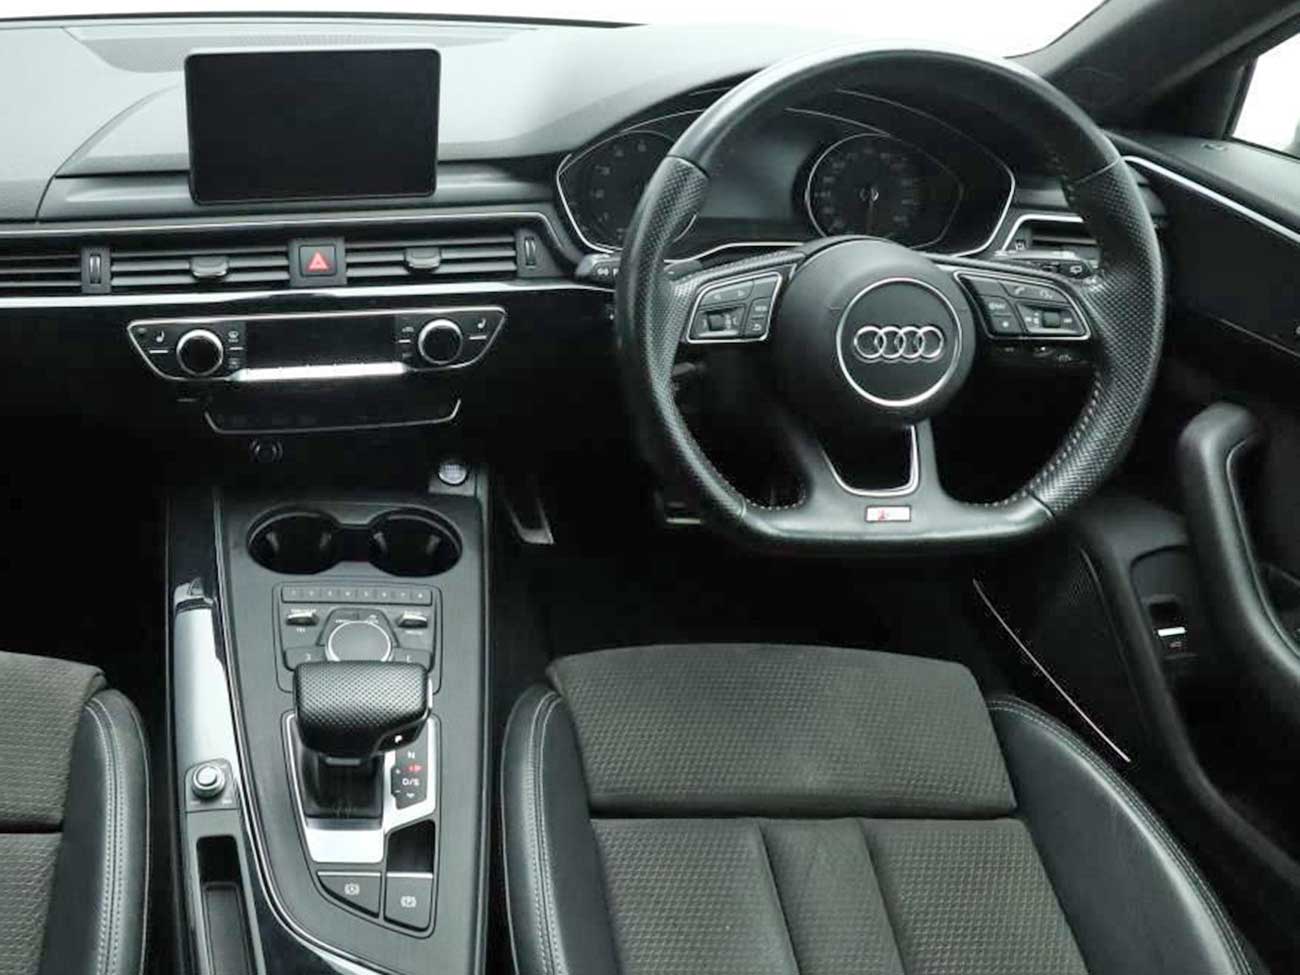 Audi A4 Avant interior view